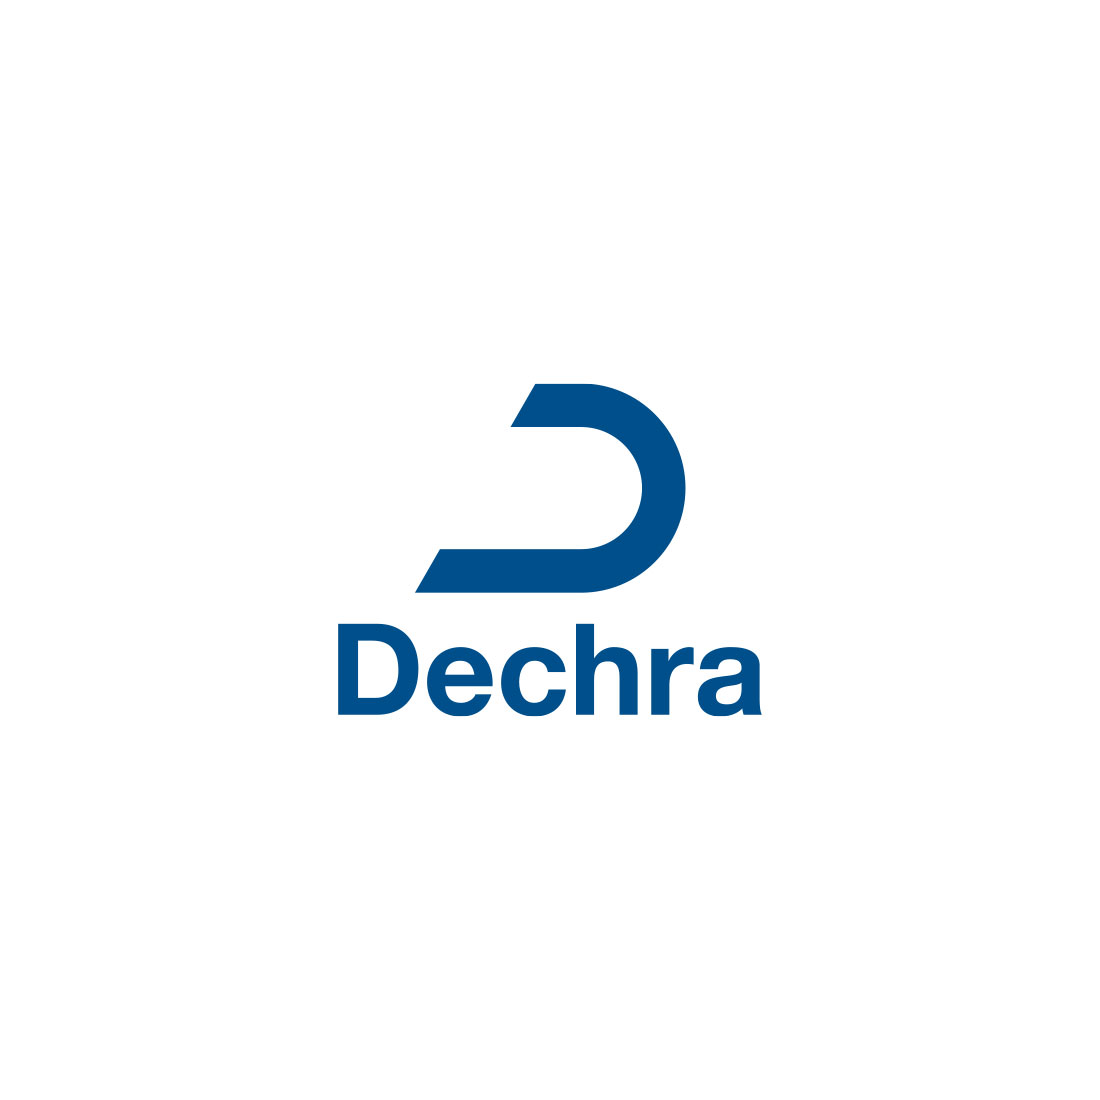 Meth-web-square-1100x1100-dechra-logo